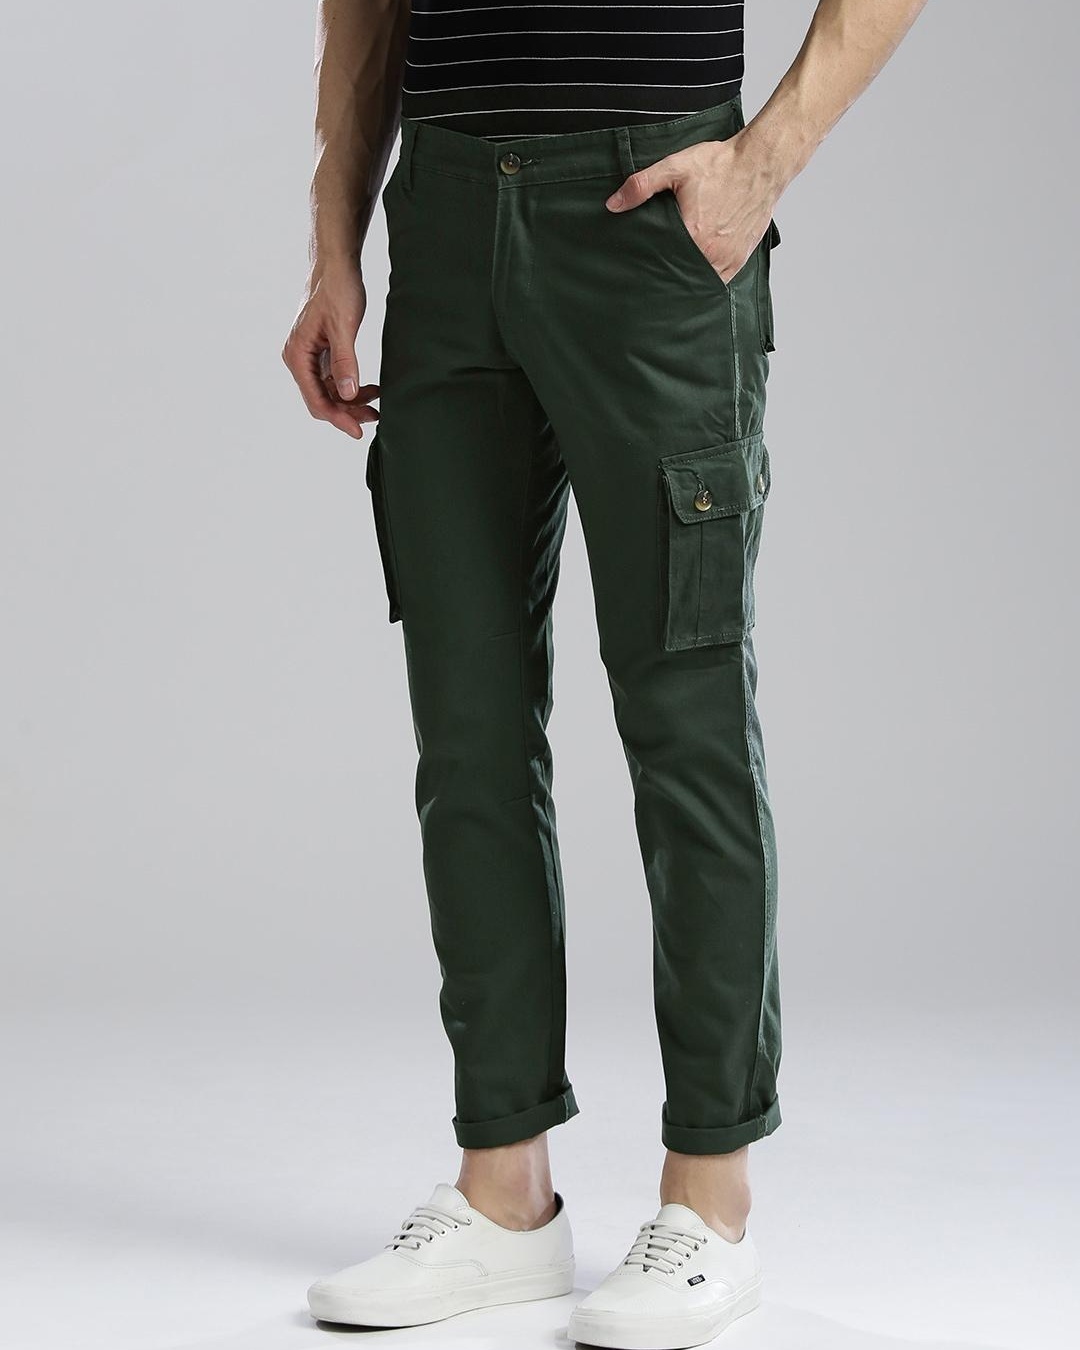 Buy Men's Blue Slim Fit Cargo Trousers Online at Bewakoof